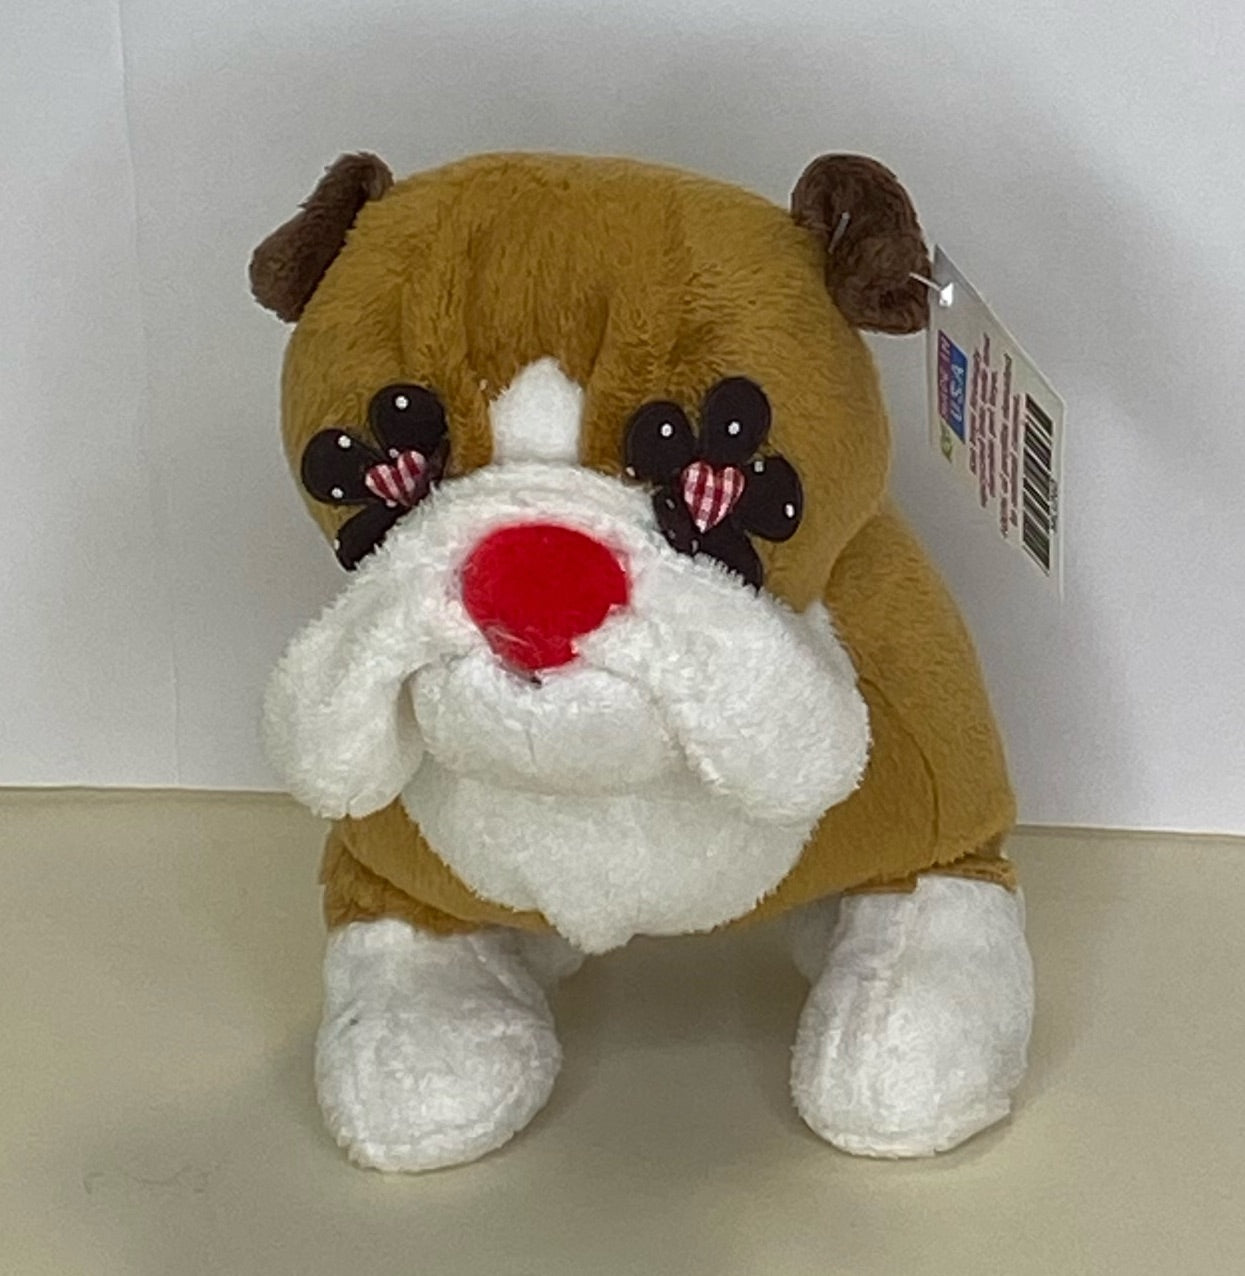 Mini Me Squeaky Breed Dog Toy: Bulldog